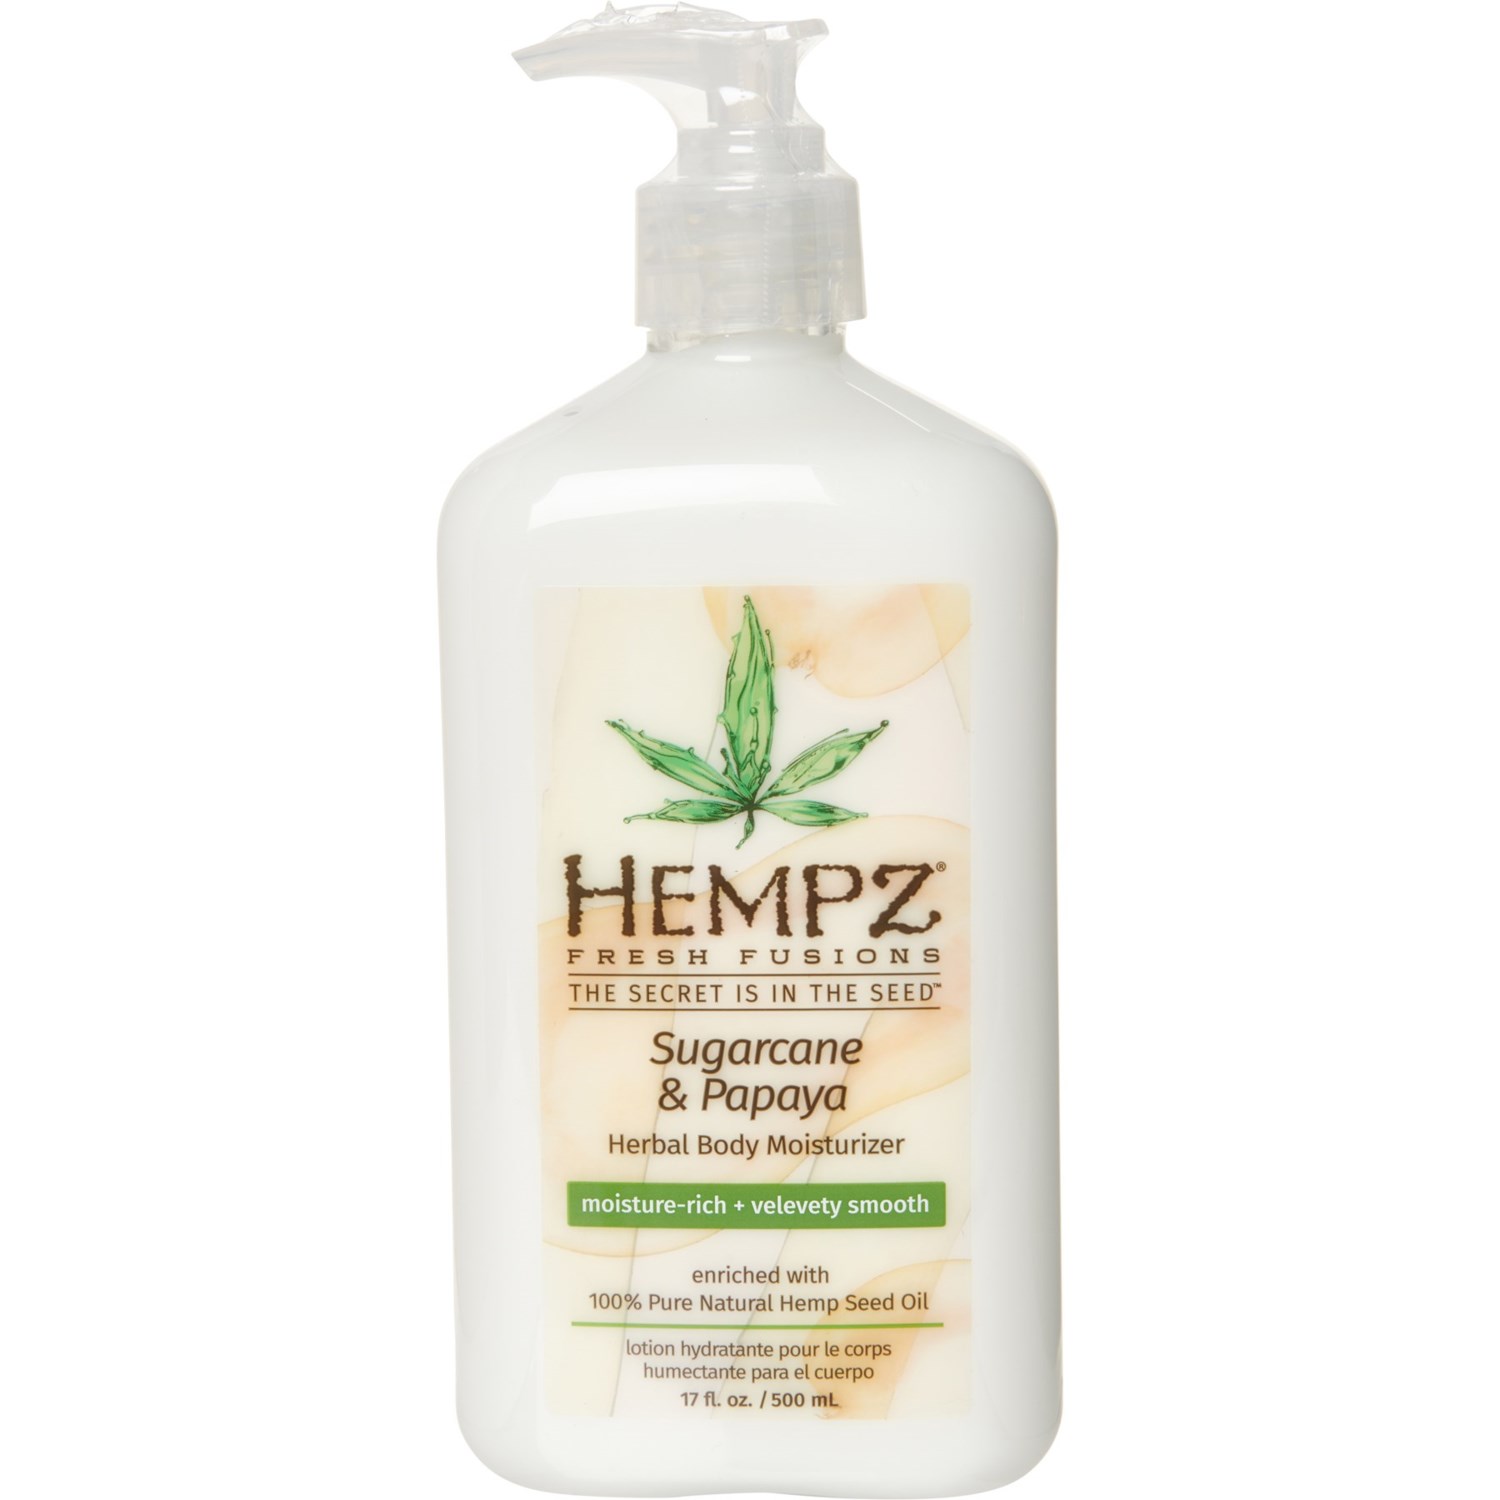 Hempz Fresh Fusions Sugarcane and Papaya Herbal Body Moisturizer - 17 oz.